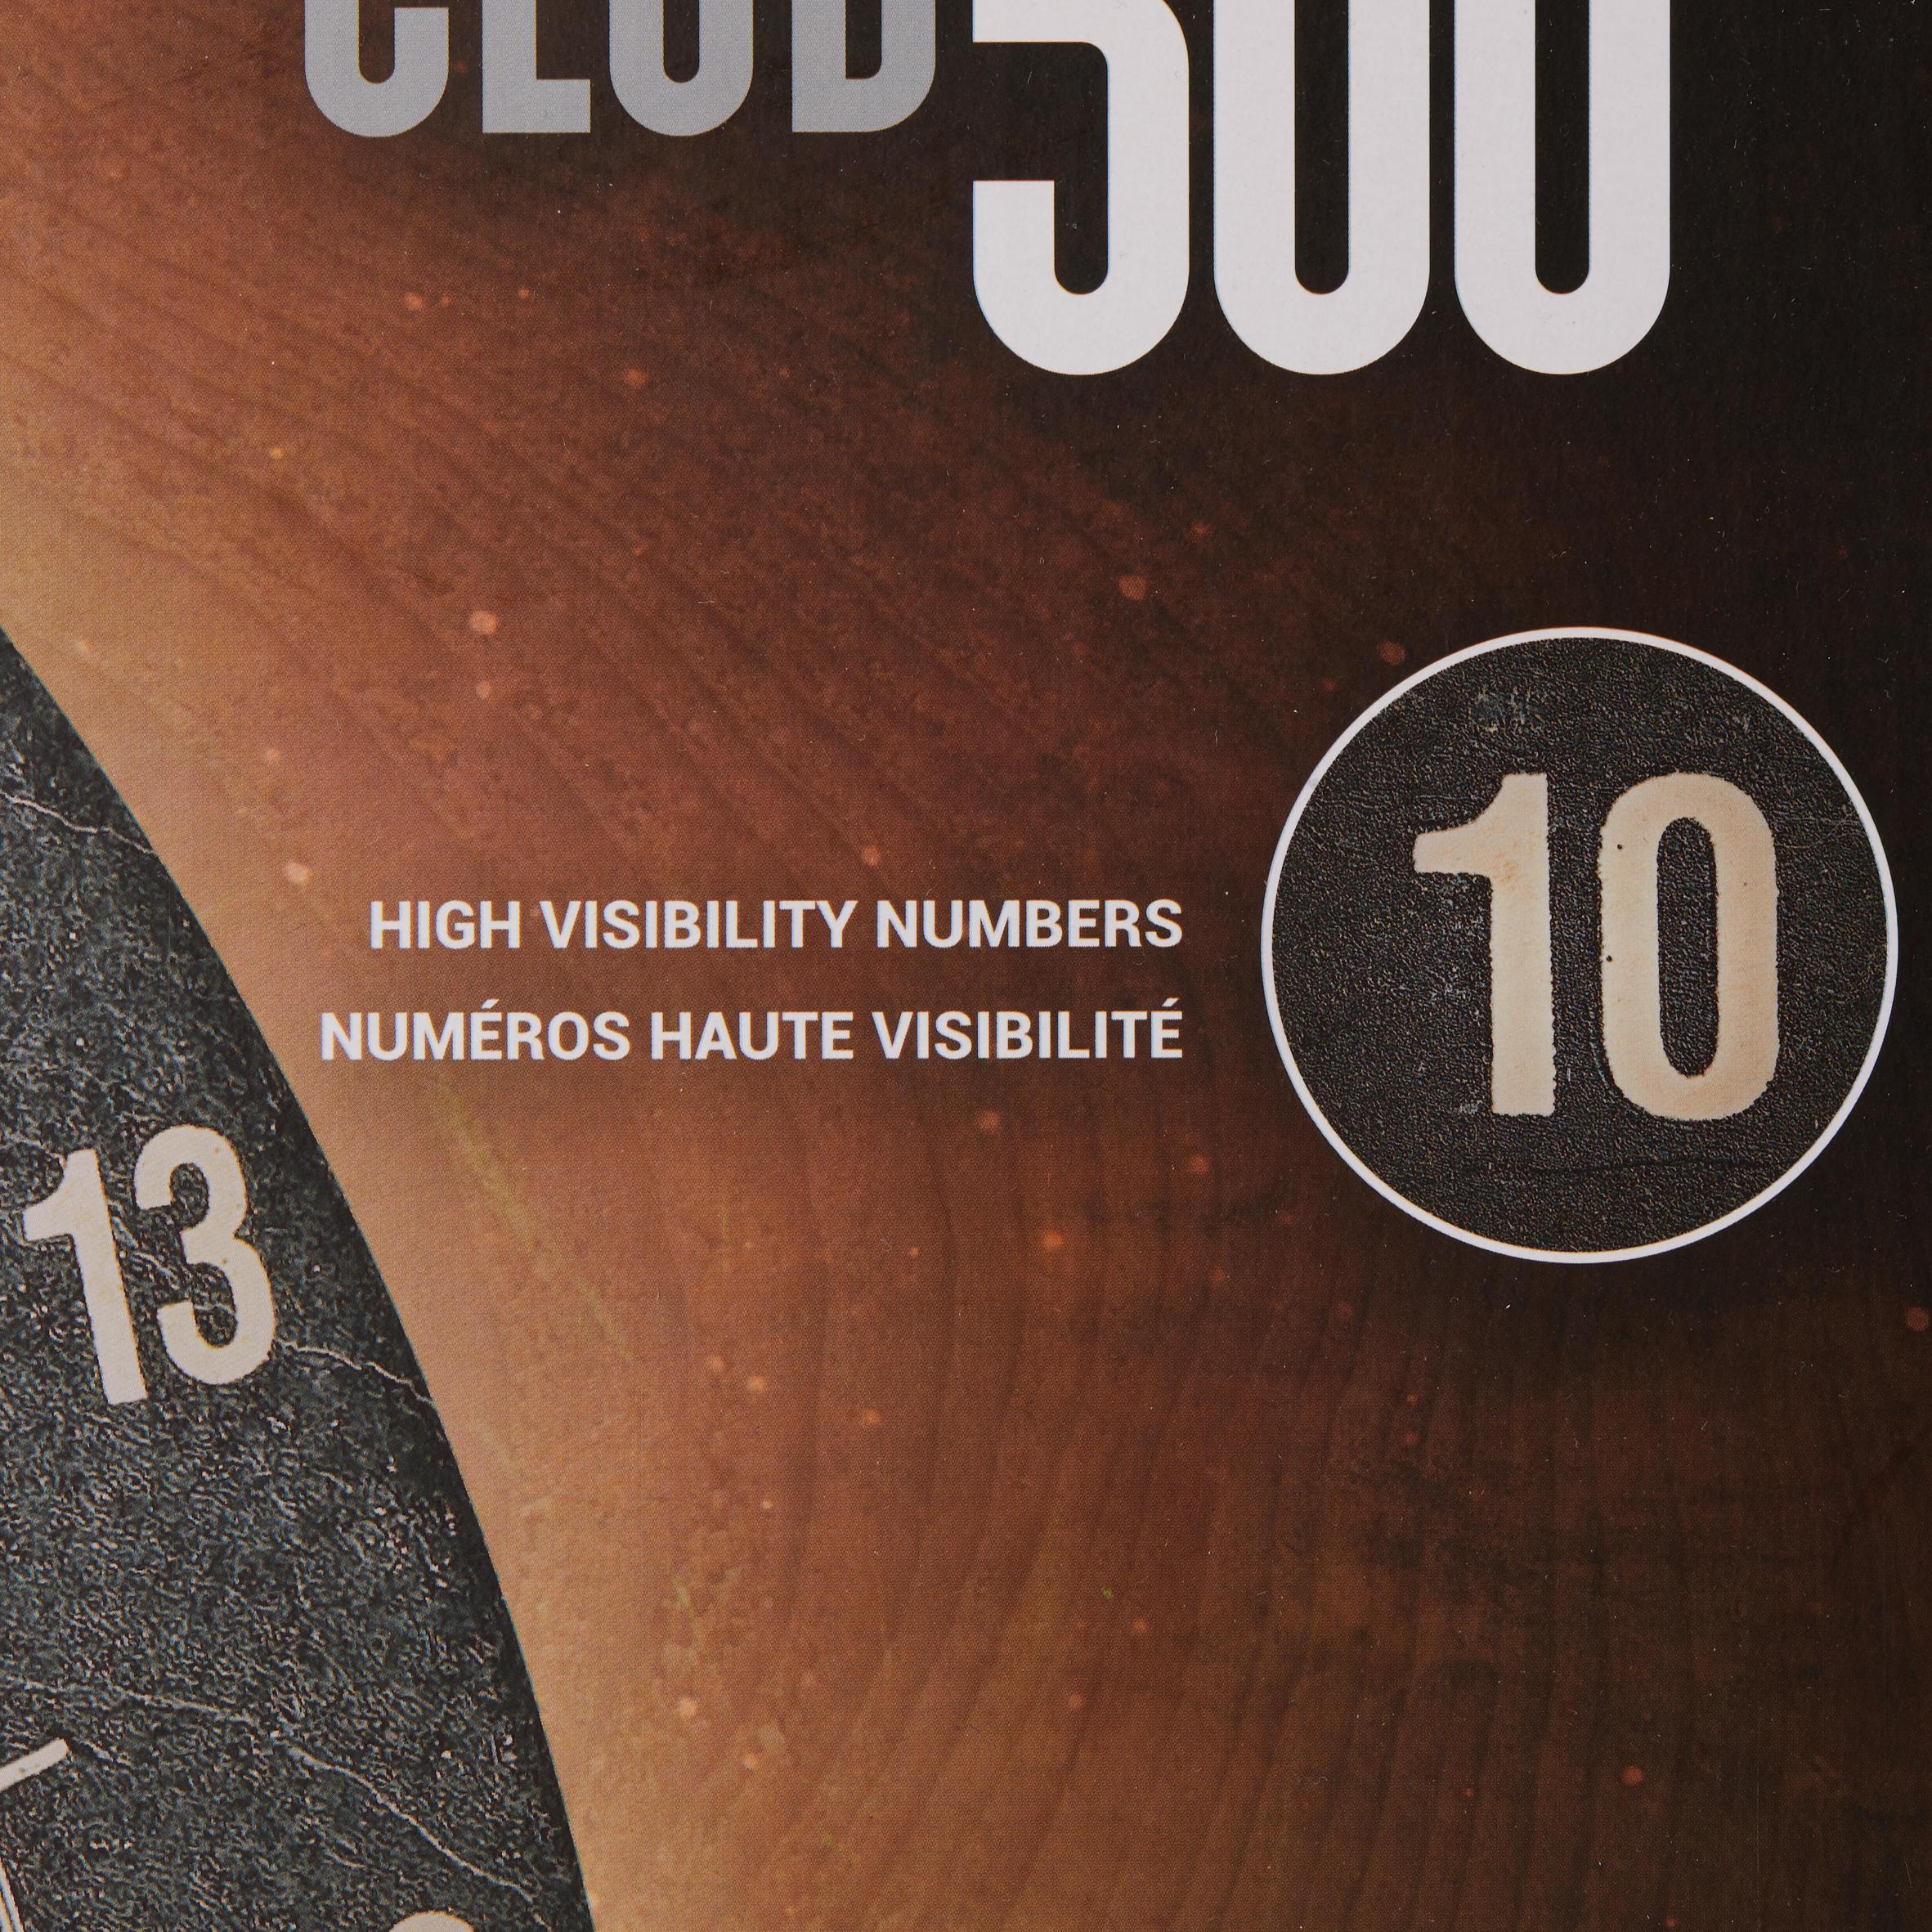 Steel Tip Dartboard Club 500 - CANAVERAL